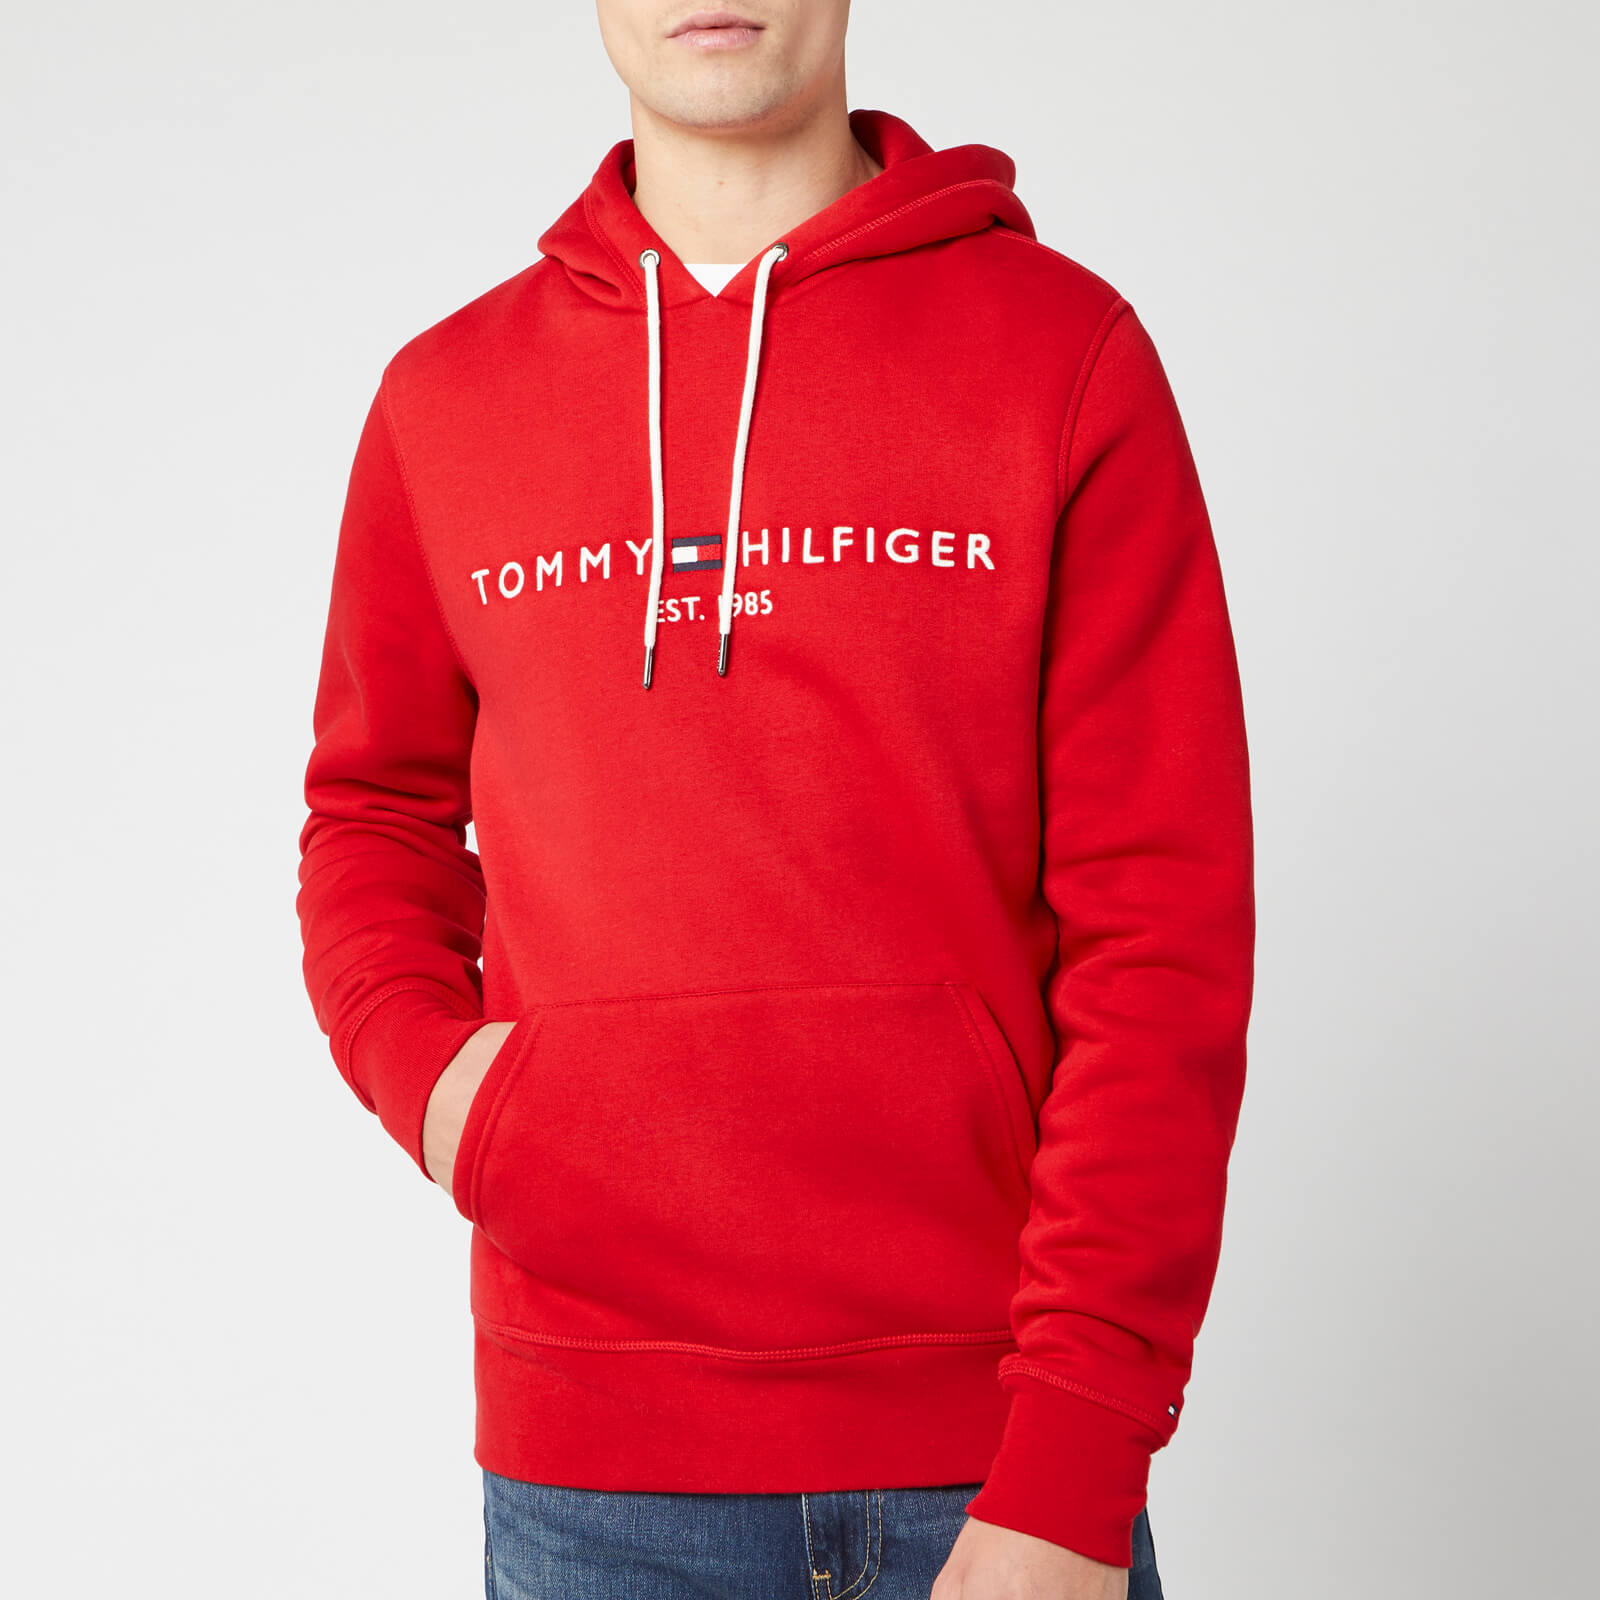 red tommy sweatshirt